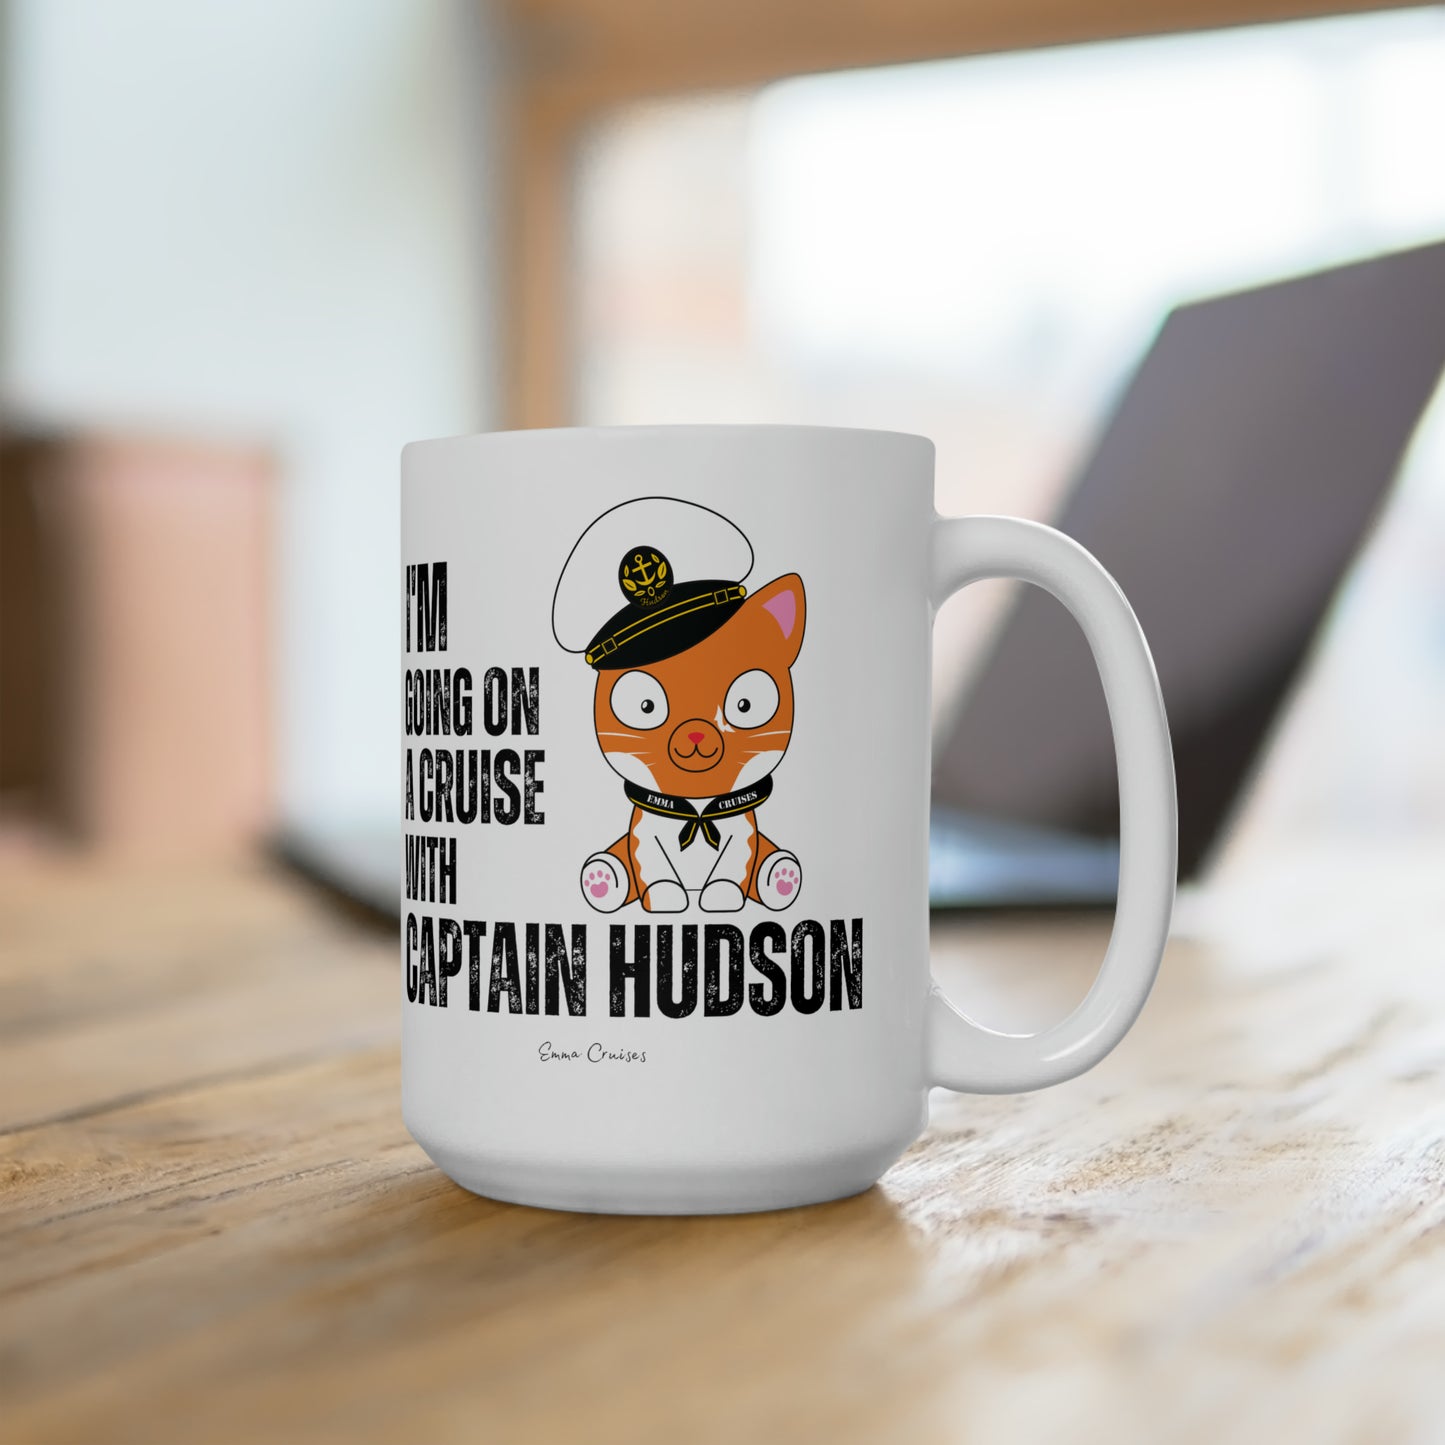 I'm Going on a Cruise With Captain Hudson - Ceramic Mug